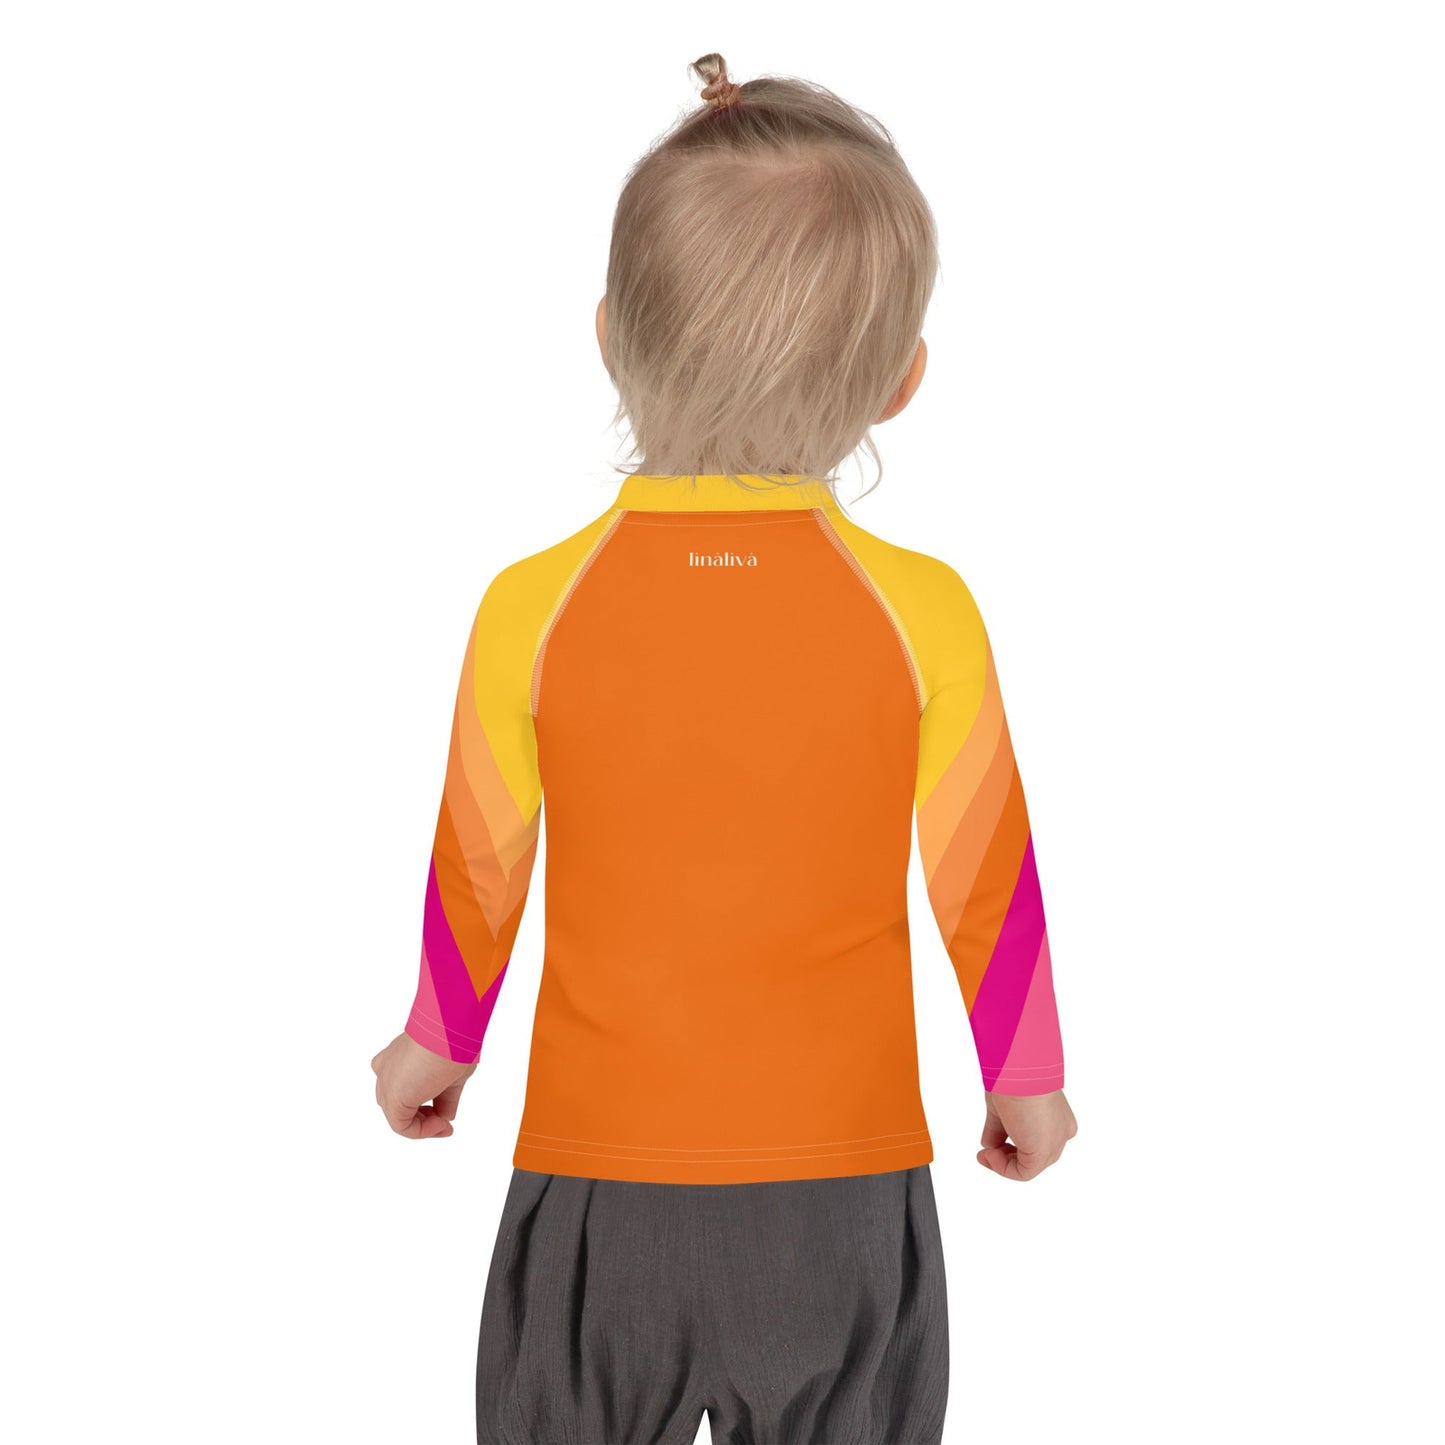 Hero -  - Surfshirt für Babies & Kinder - UV-Shirt - Langarm Badeshirt - yellow/pink/orange